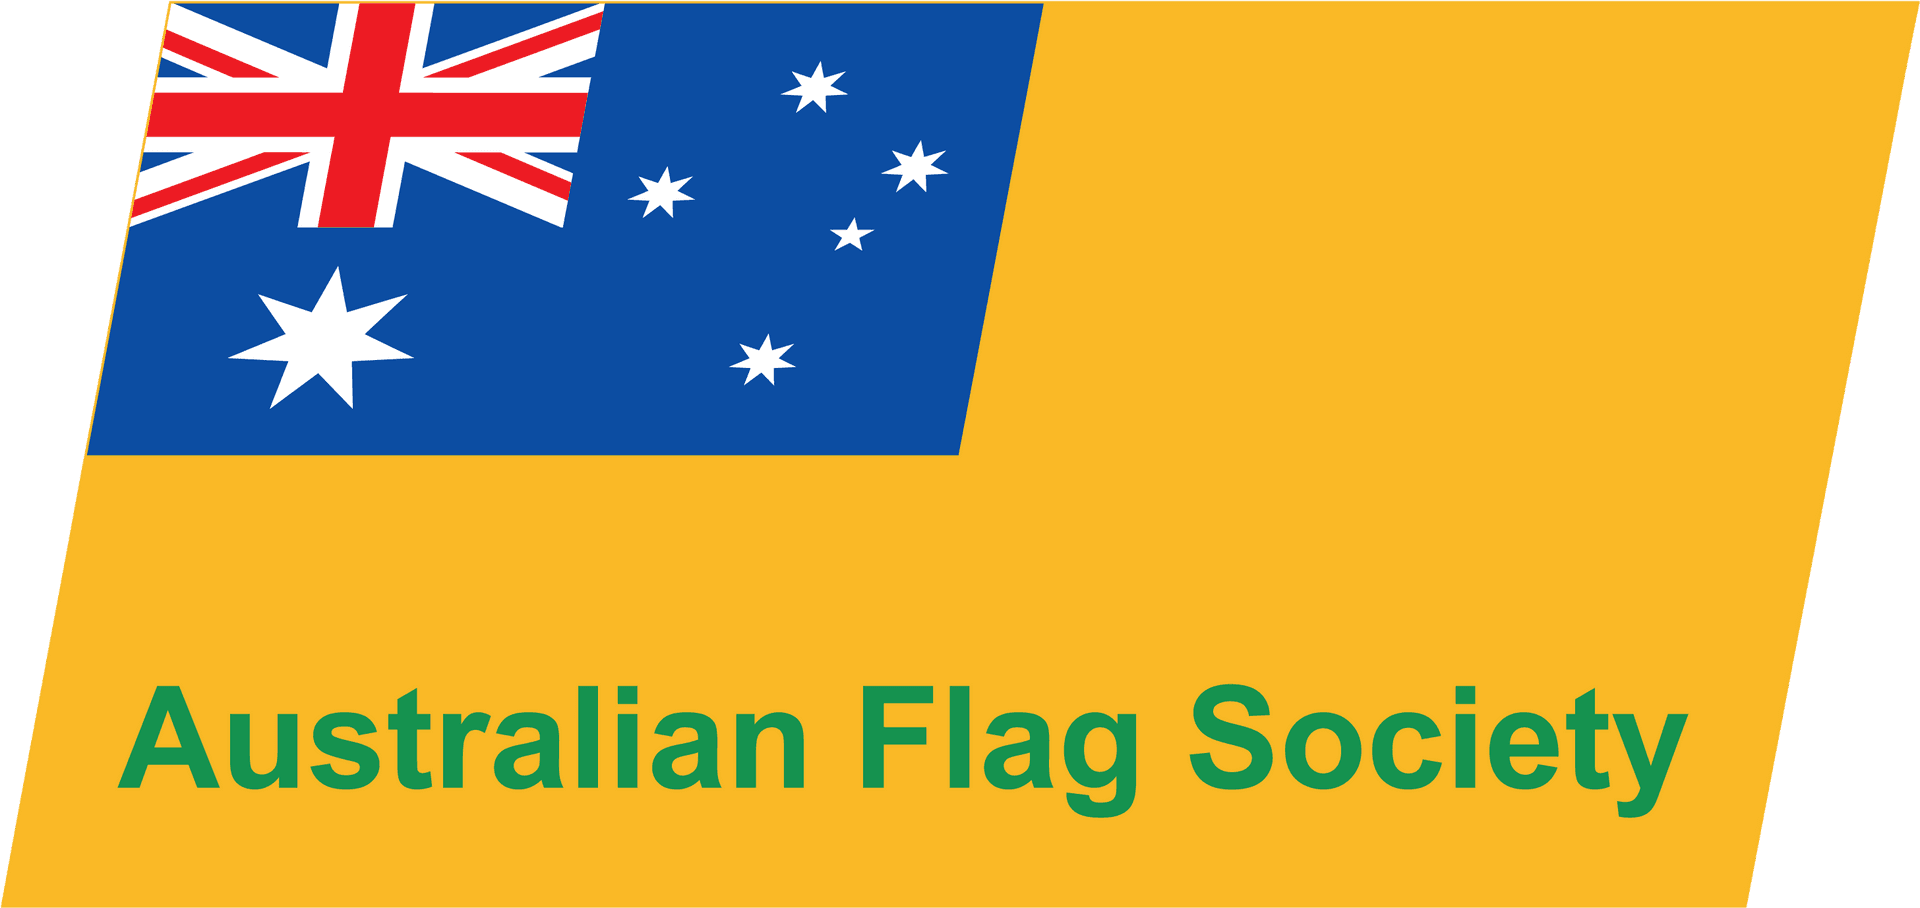 Australian Flag Society Logo PNG